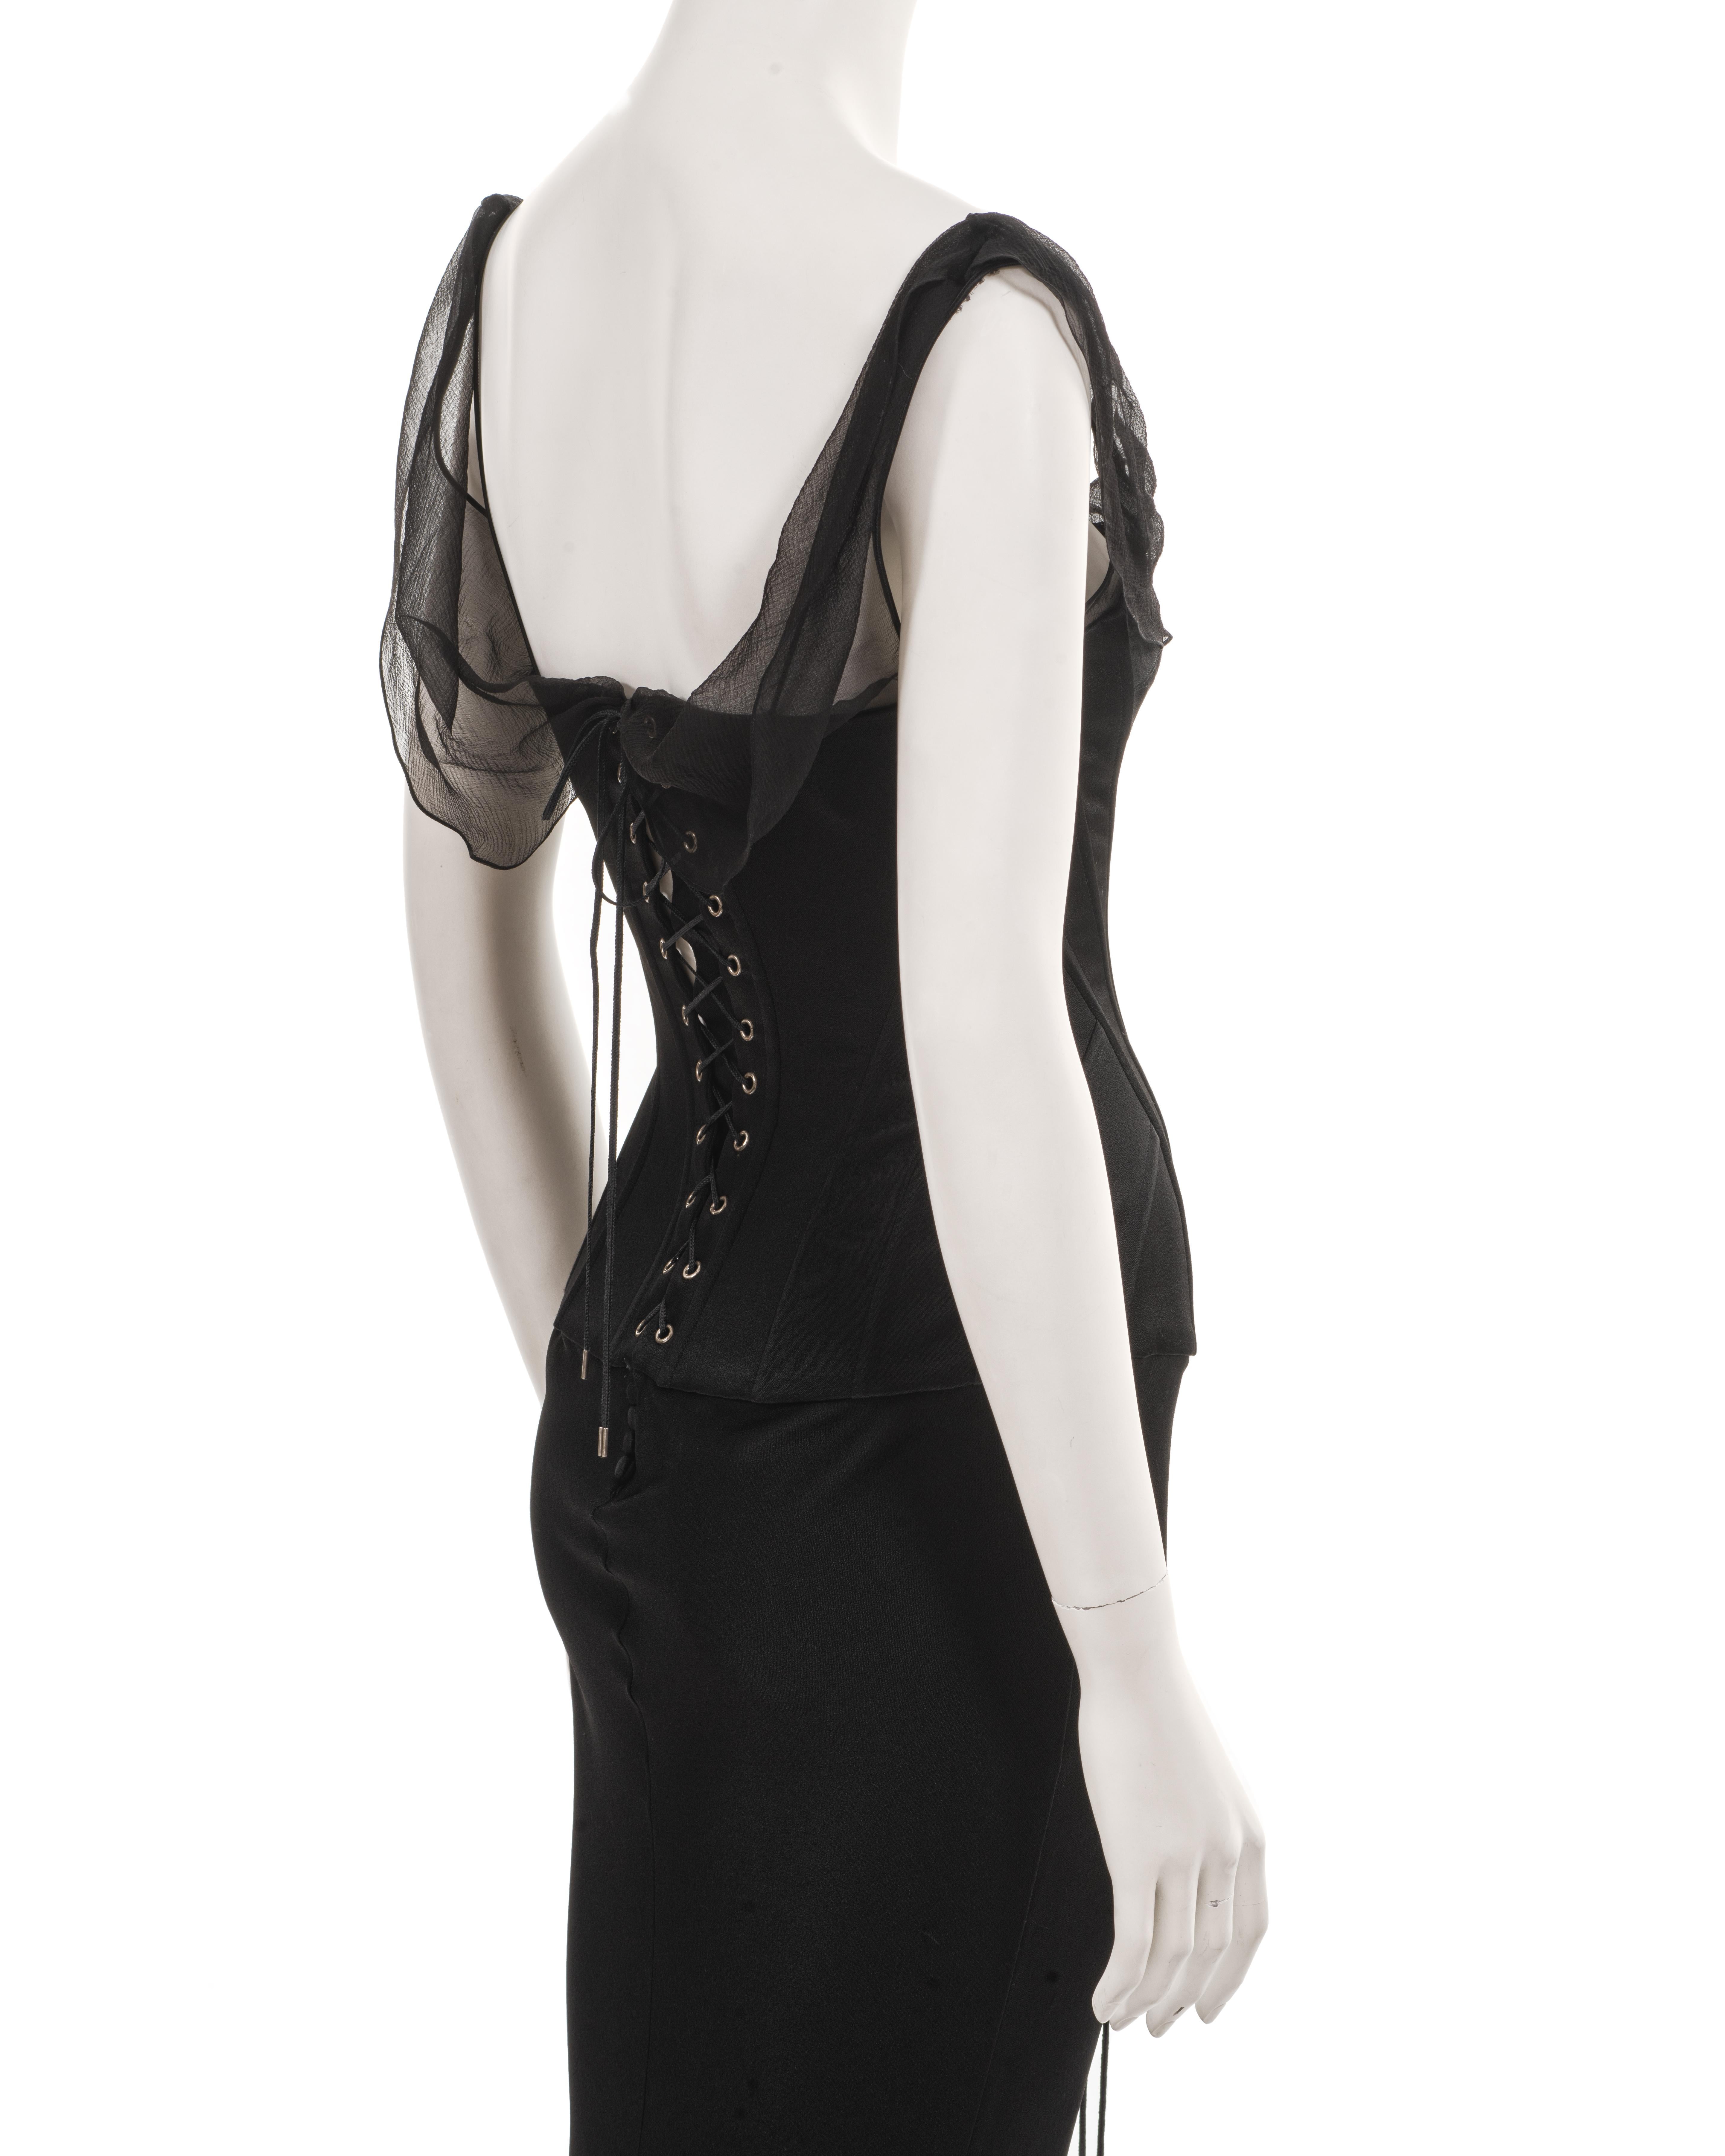 John Galliano black satin evening dress with integrated corset, ss 2003 1